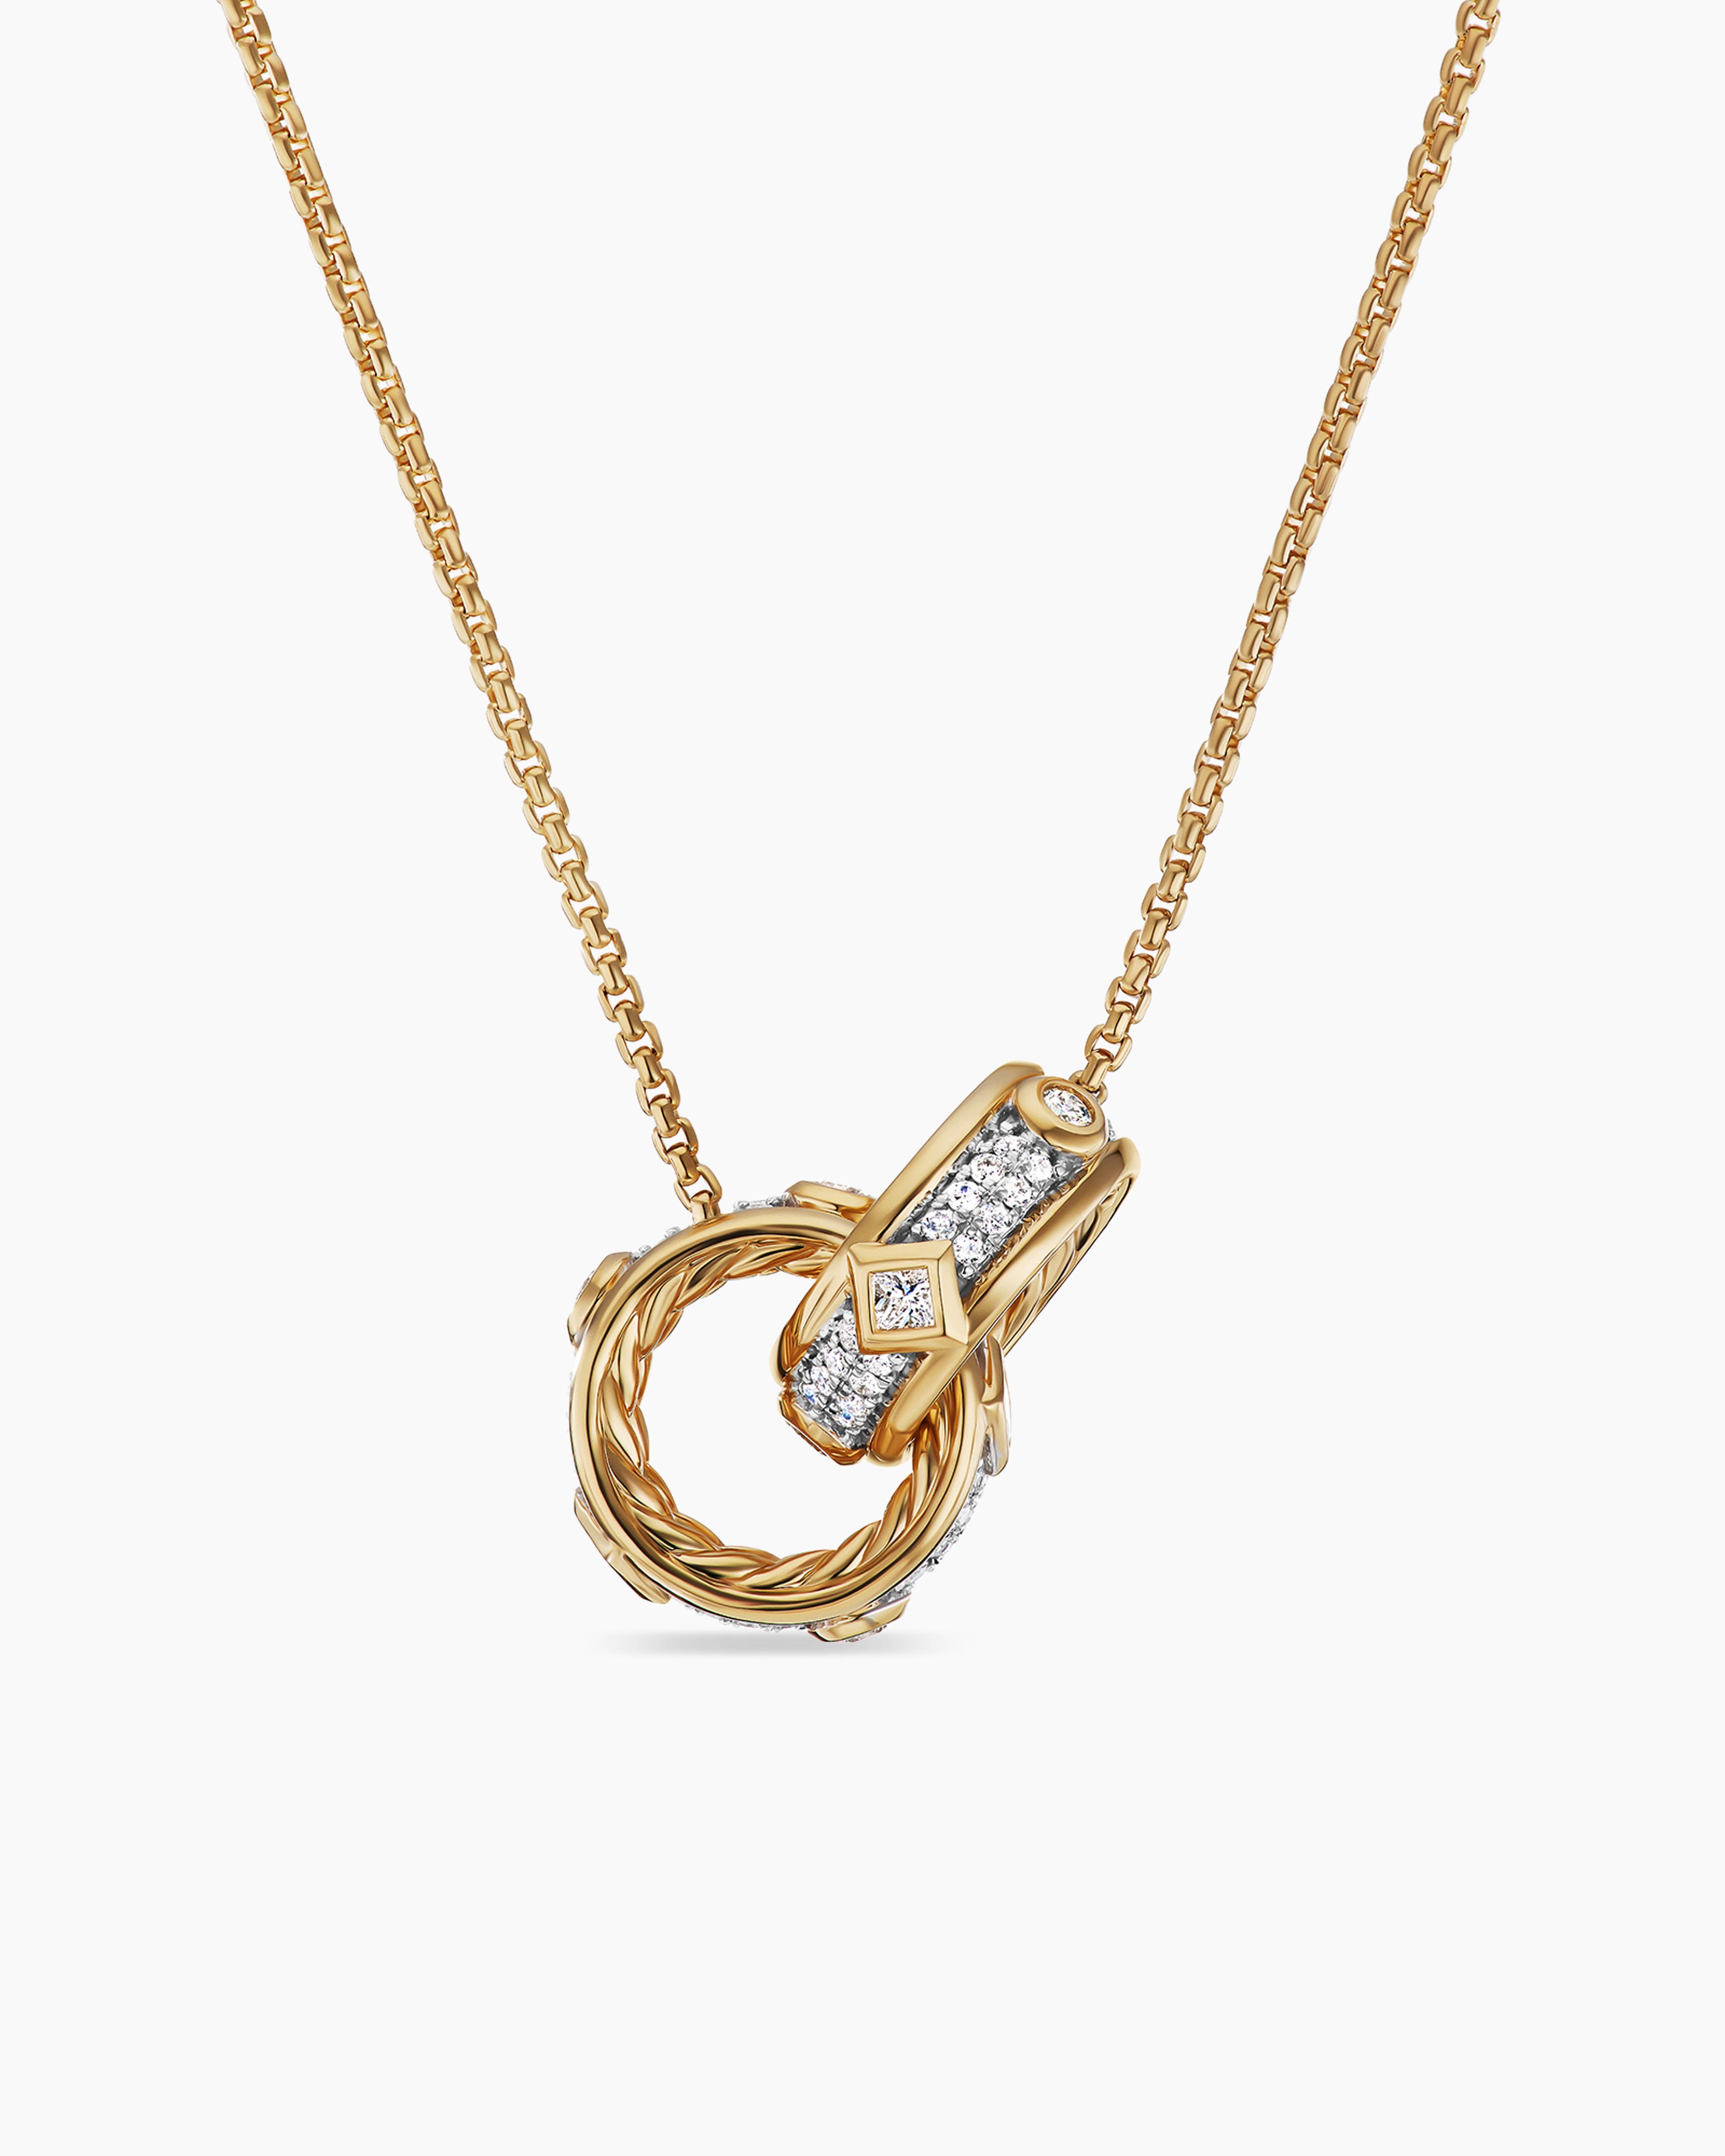 David Yurman Modern Renaissance Double Pendant Necklace in 18K Yellow Gold with Full Pavé Diamonds